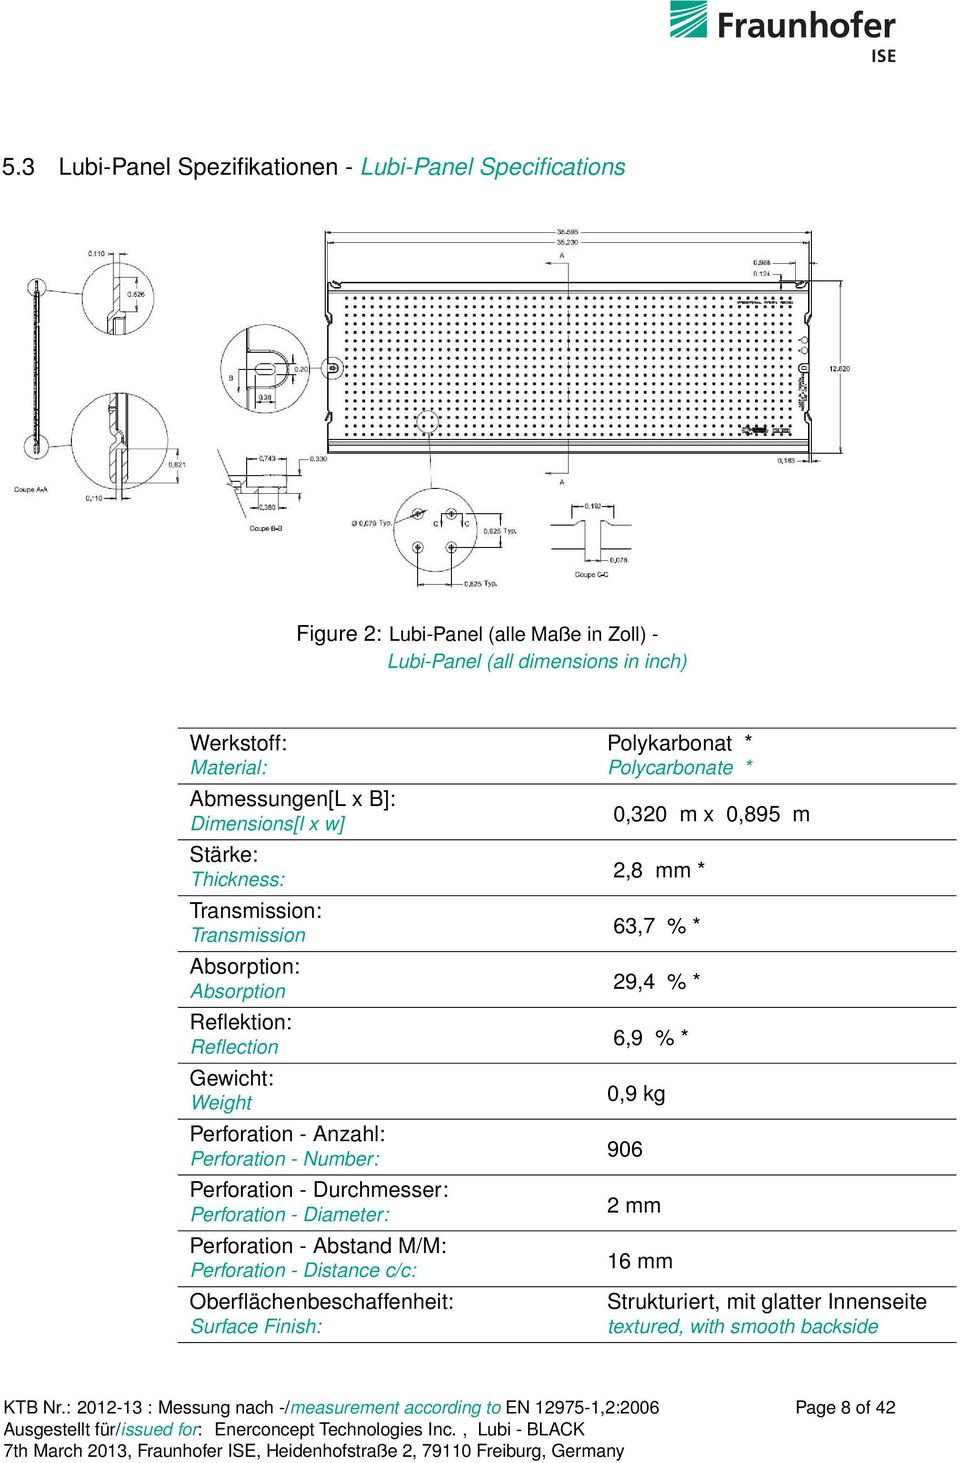 Perforation - Number: Perforation - Durchmesser: Perforation - Diameter: Perforation - Abstand M/M: Perforation - Distance c/c: Oberflächenbeschaffenheit: Surface Finish: